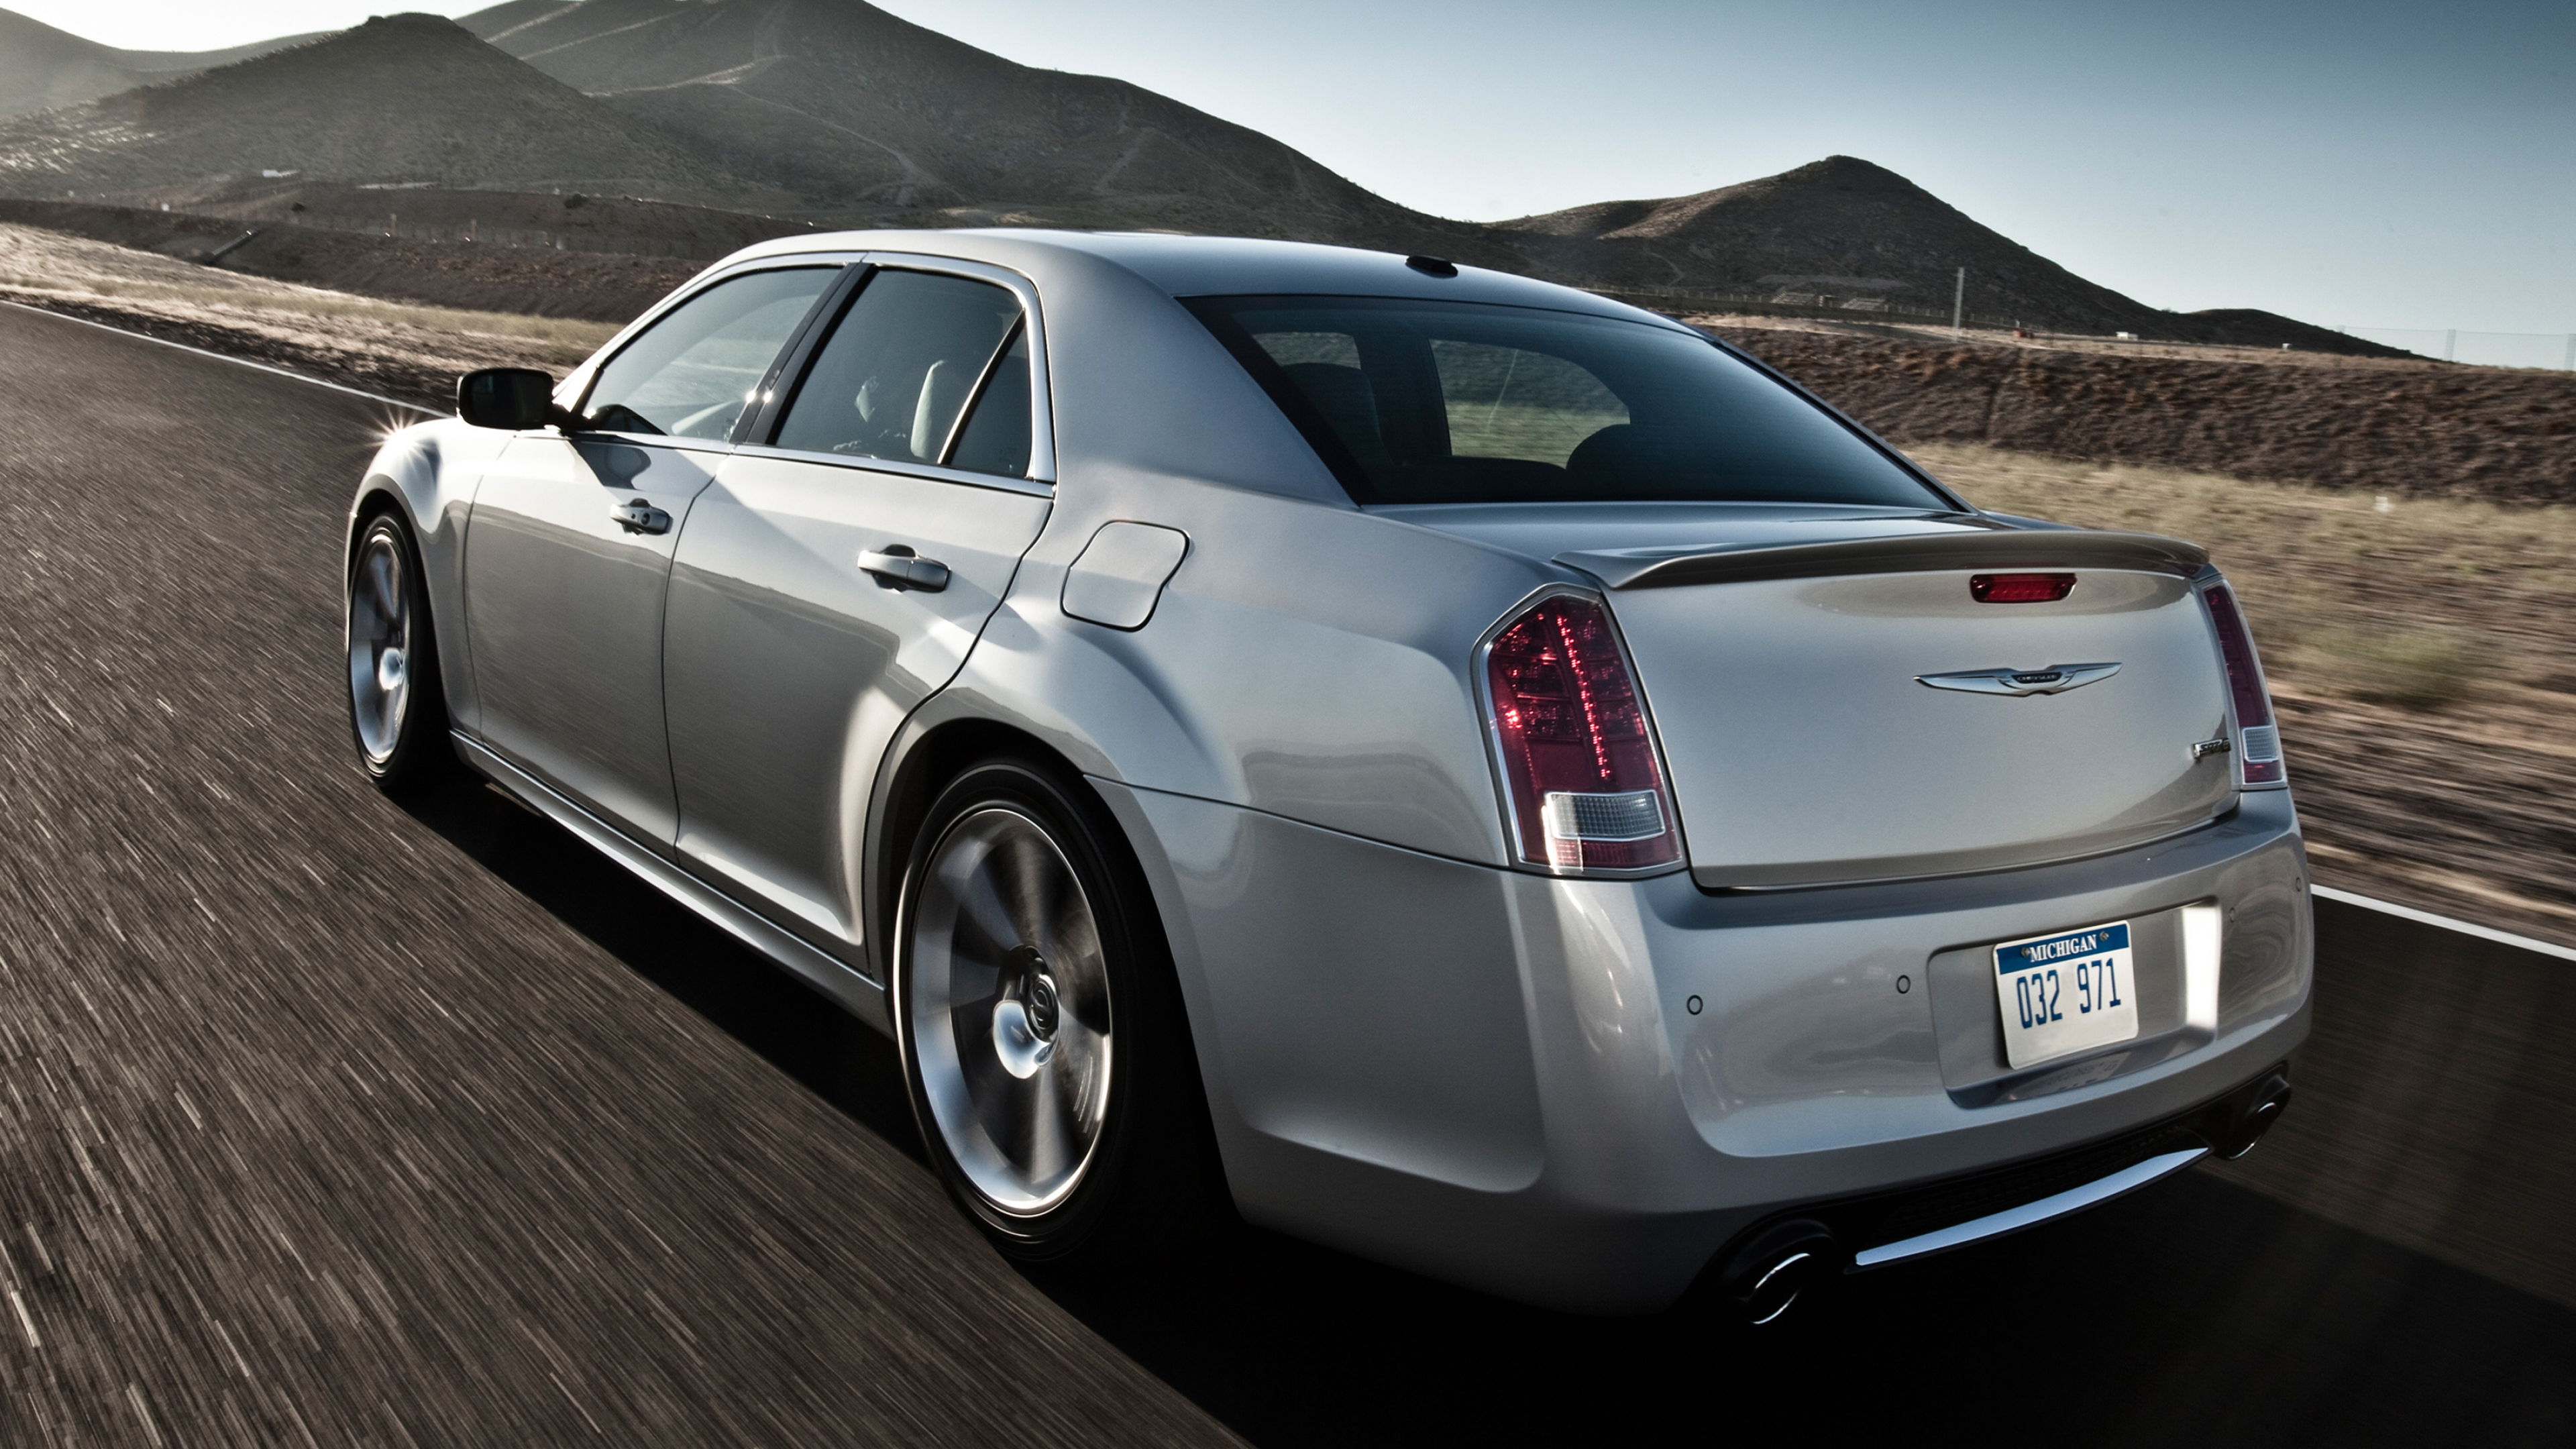 Chrysler 300, Auto elegance, SRT-8 performance, 2013 model, 3840x2160 4K Desktop